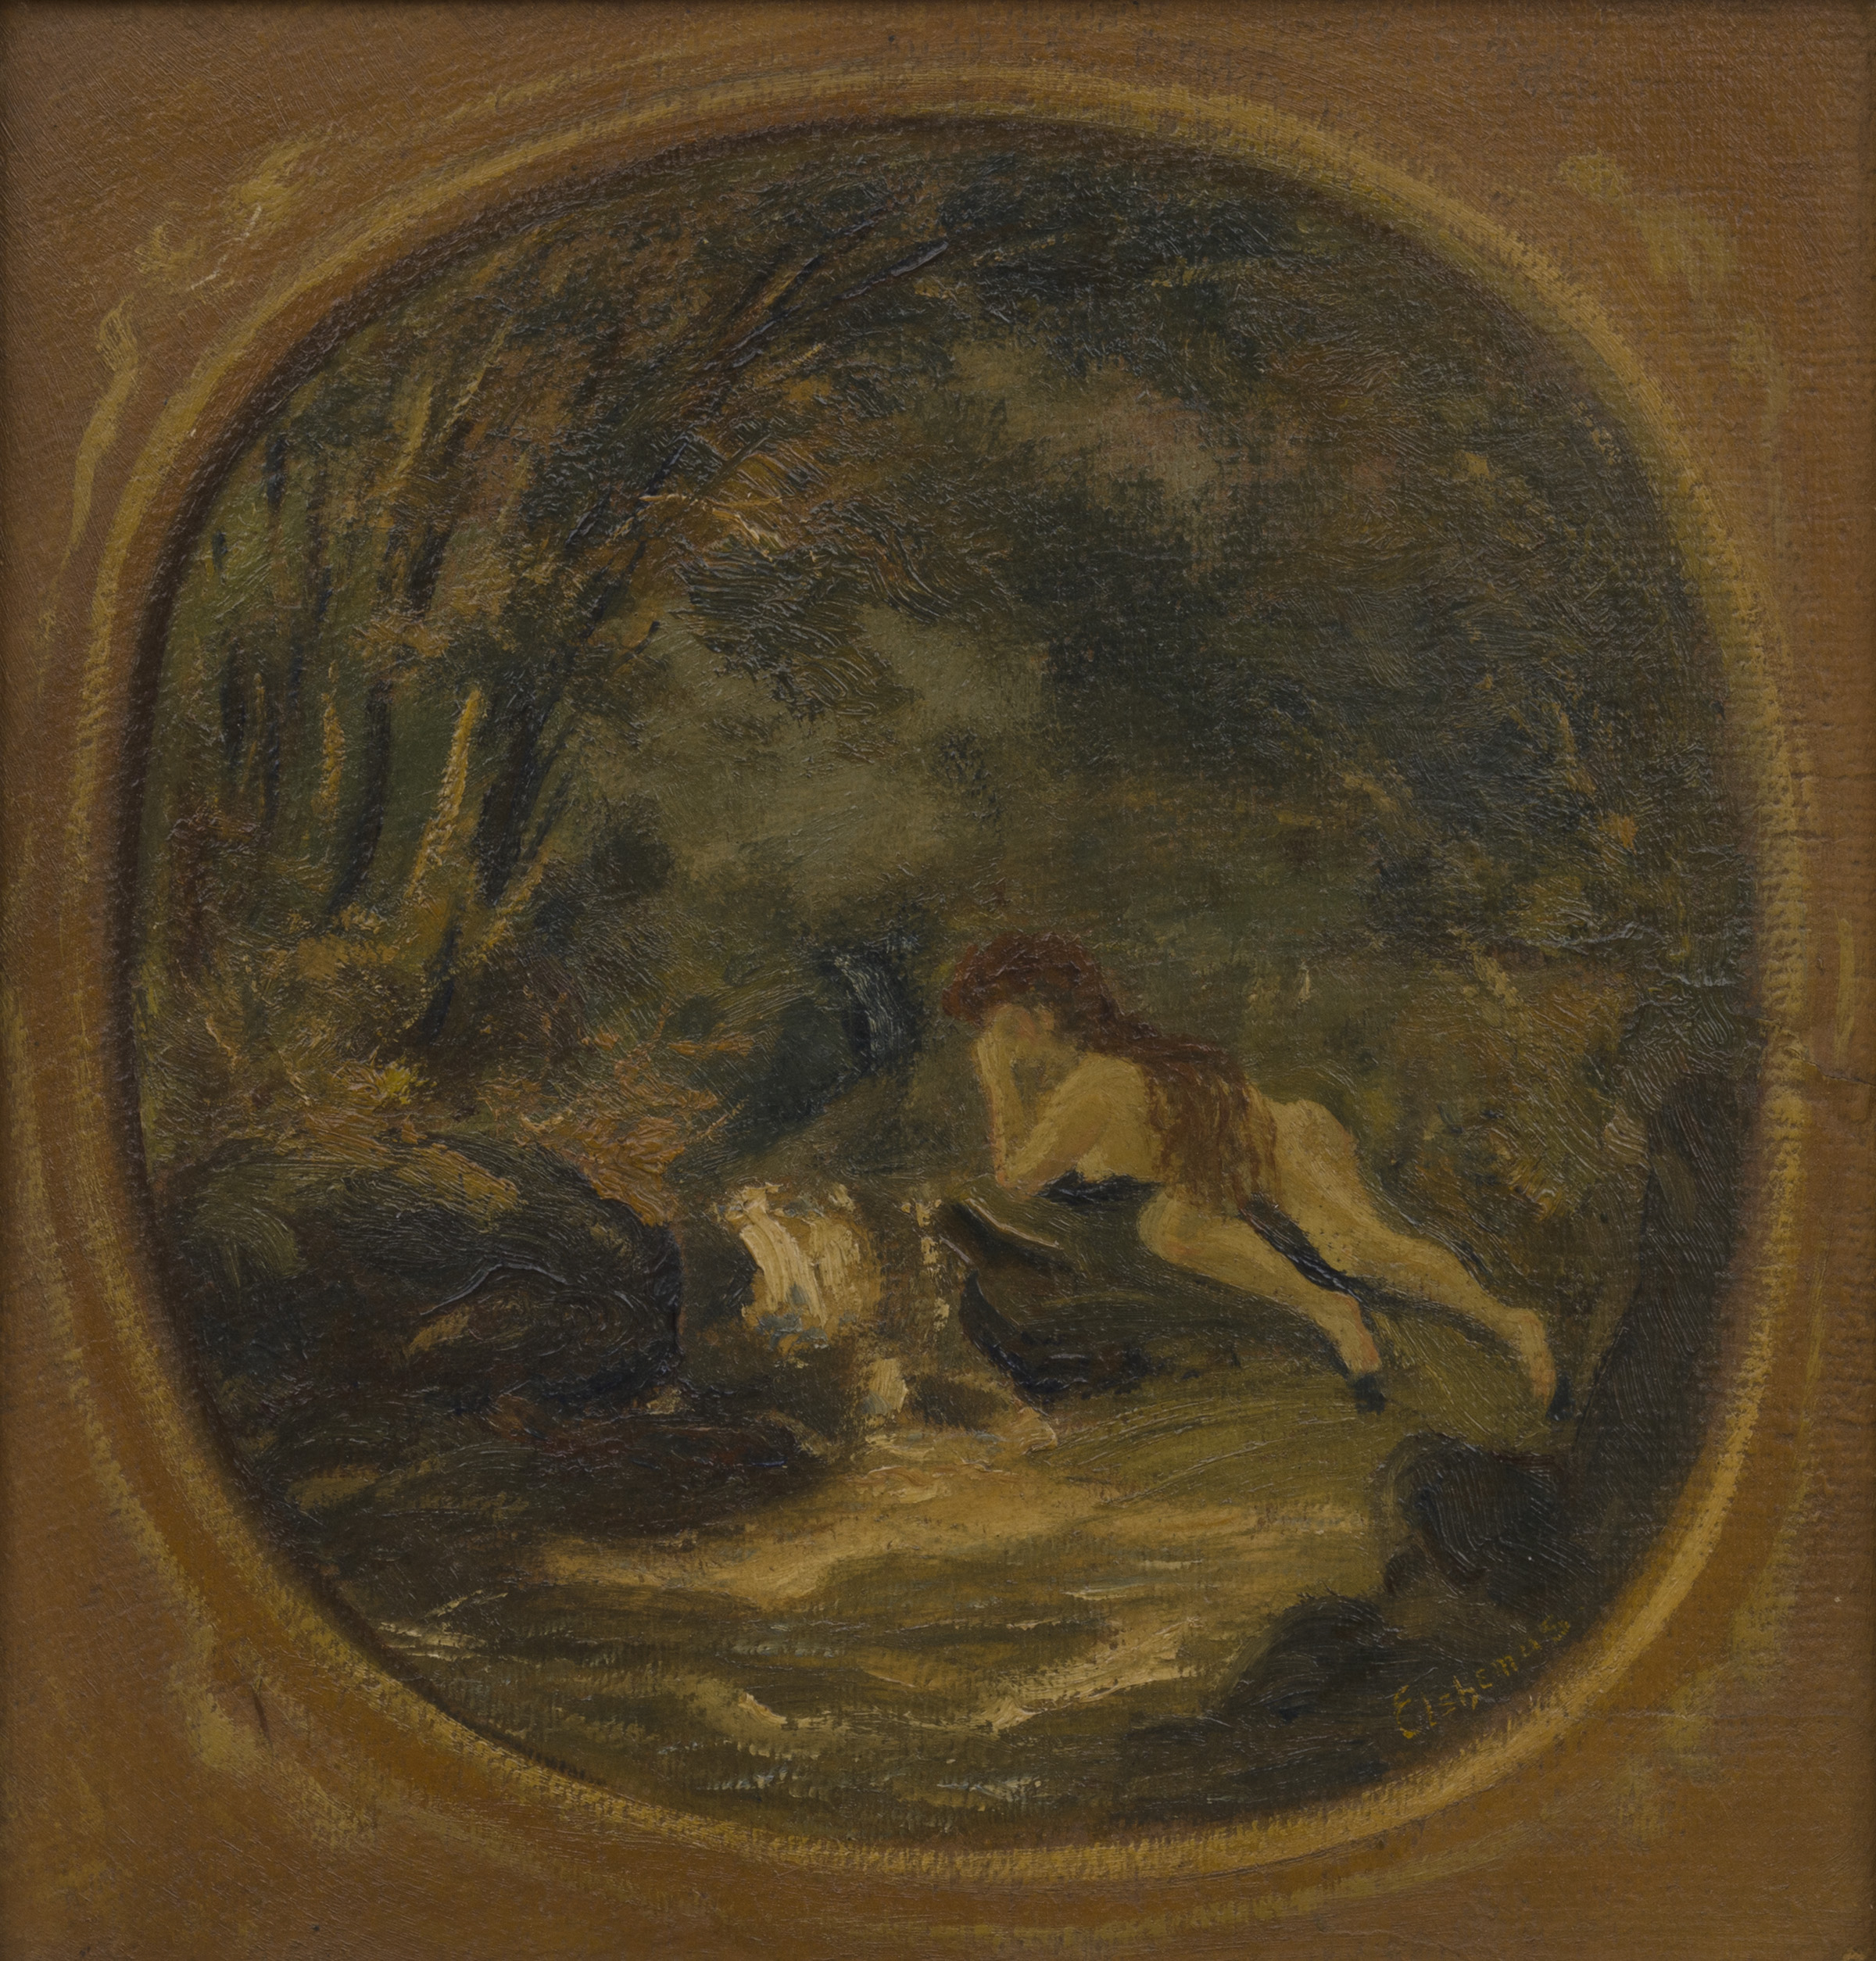   LOUIS MICHEL EILSHEMIUS   Untitled (nude in a landscape) , ca. 1909 - 1913, Oil on canvasboard, 12 x 11 1/2 in 